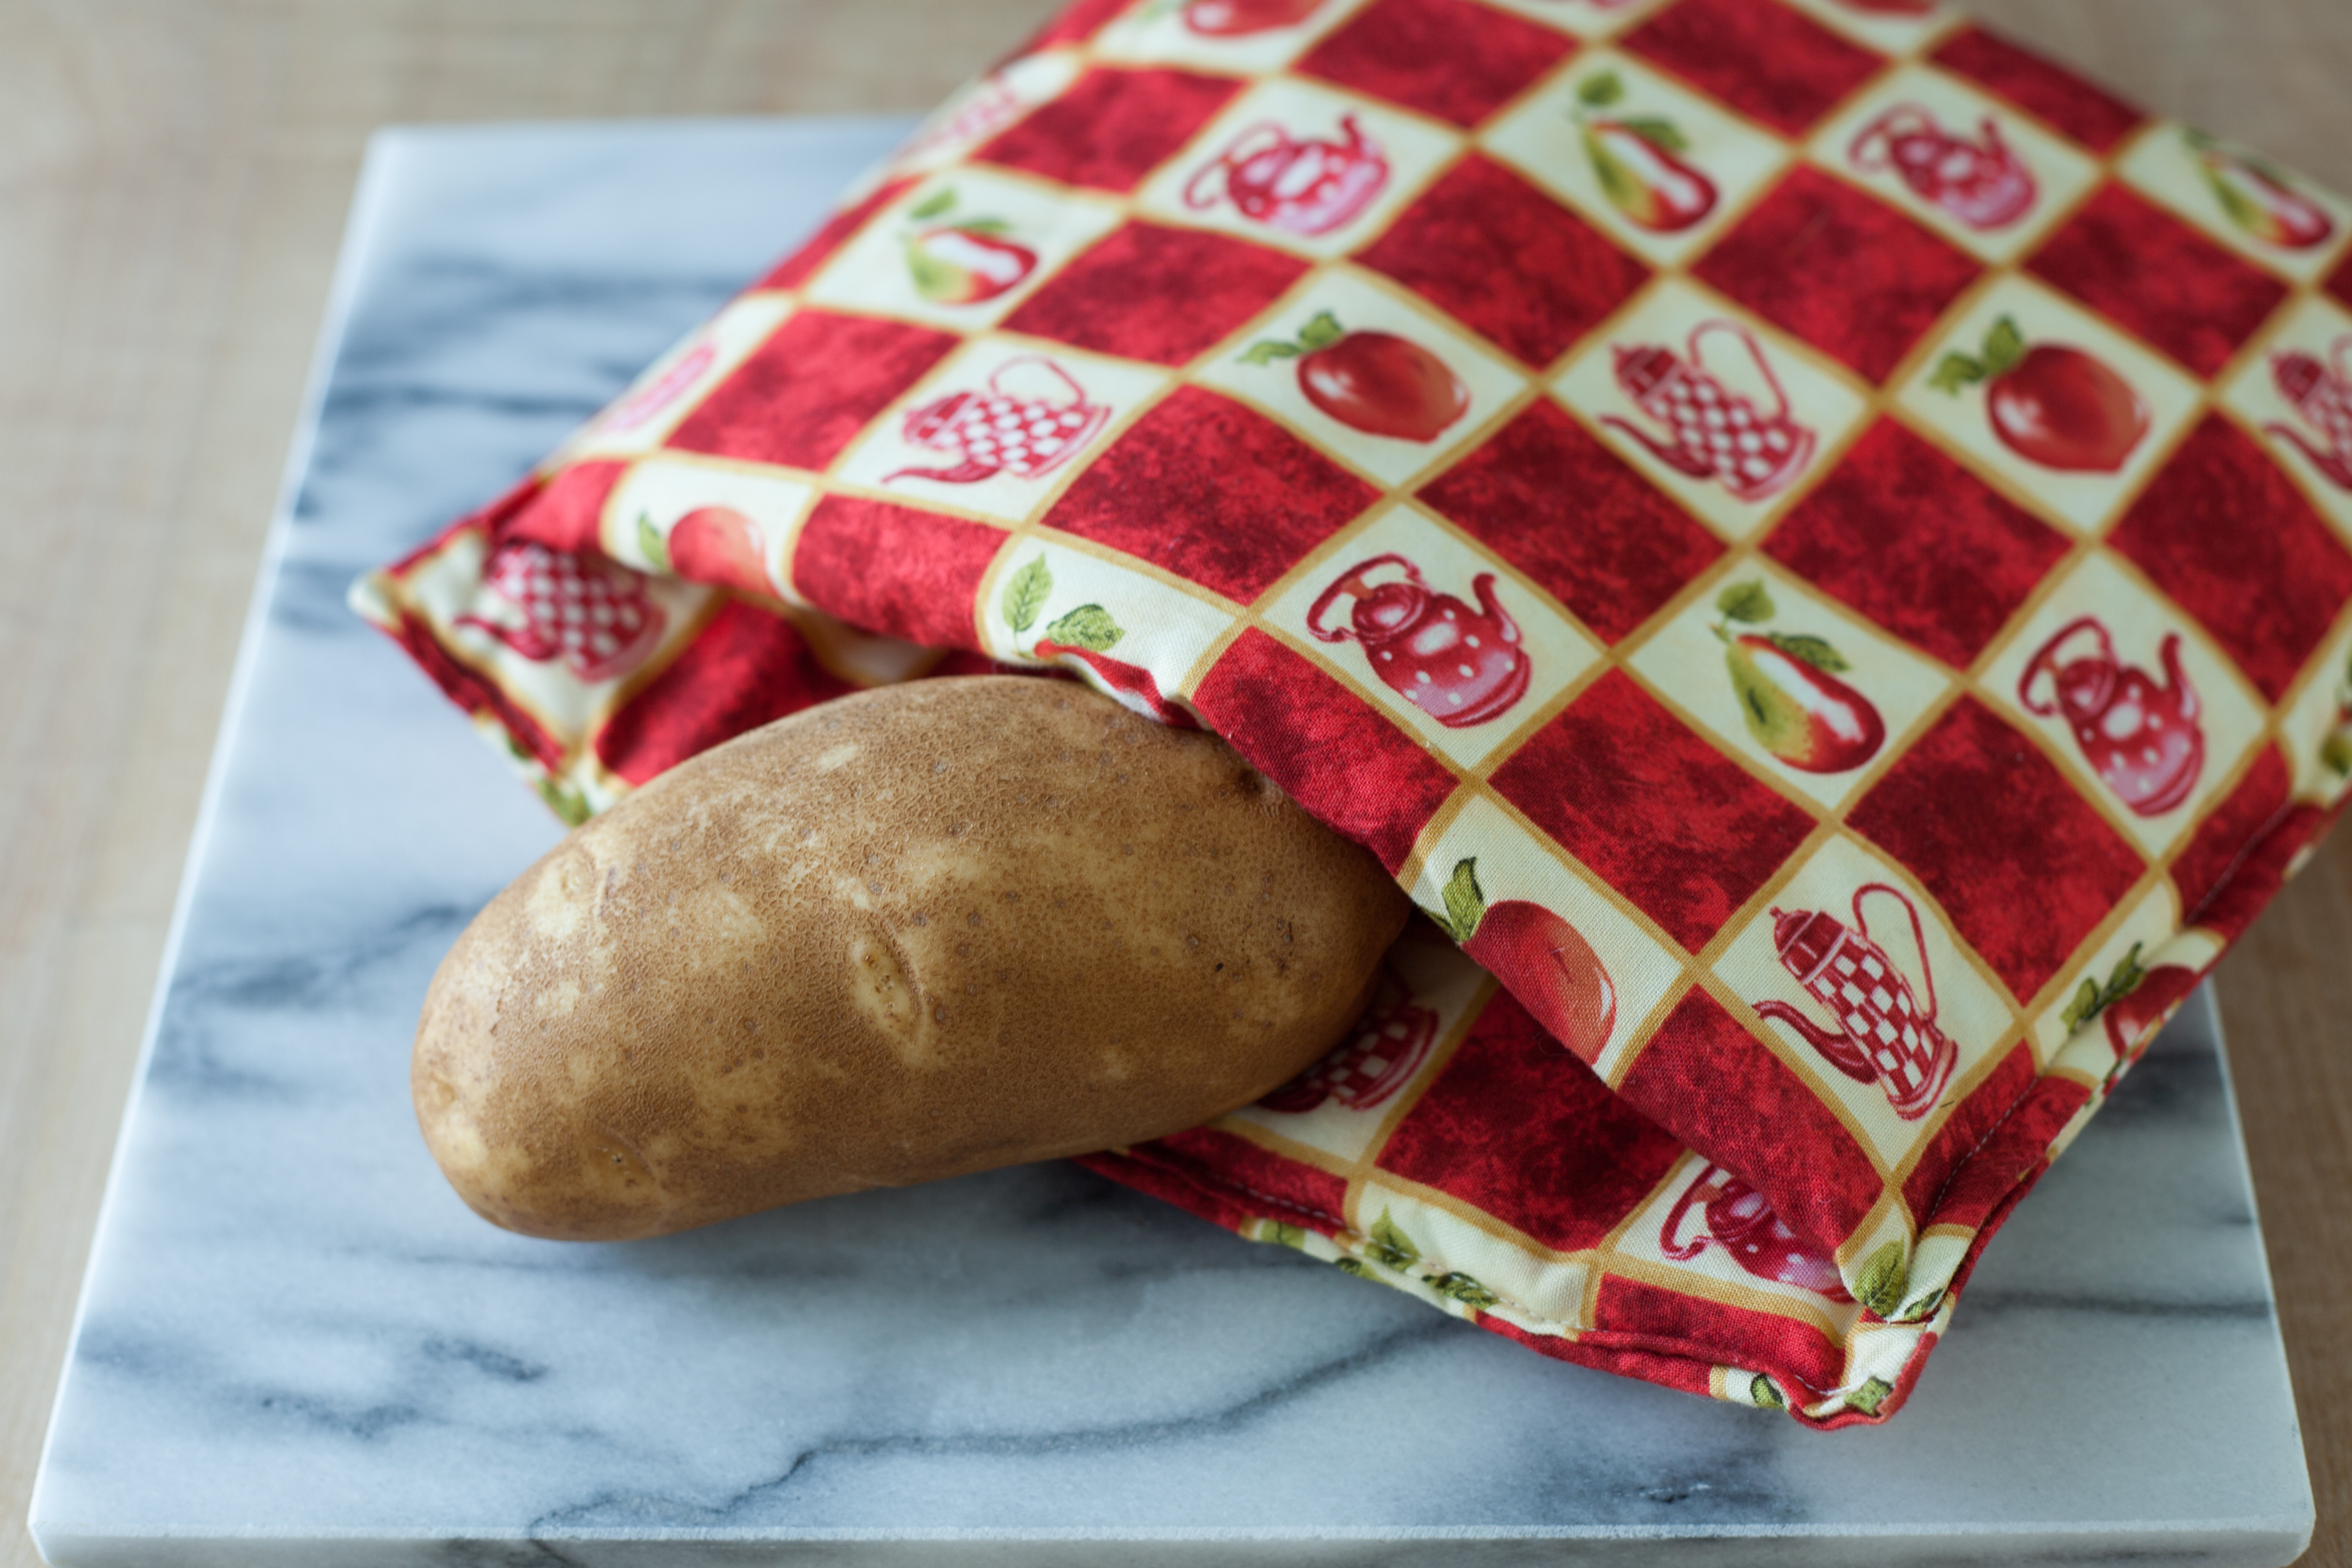 DIY Project - Microwave Potato Bag